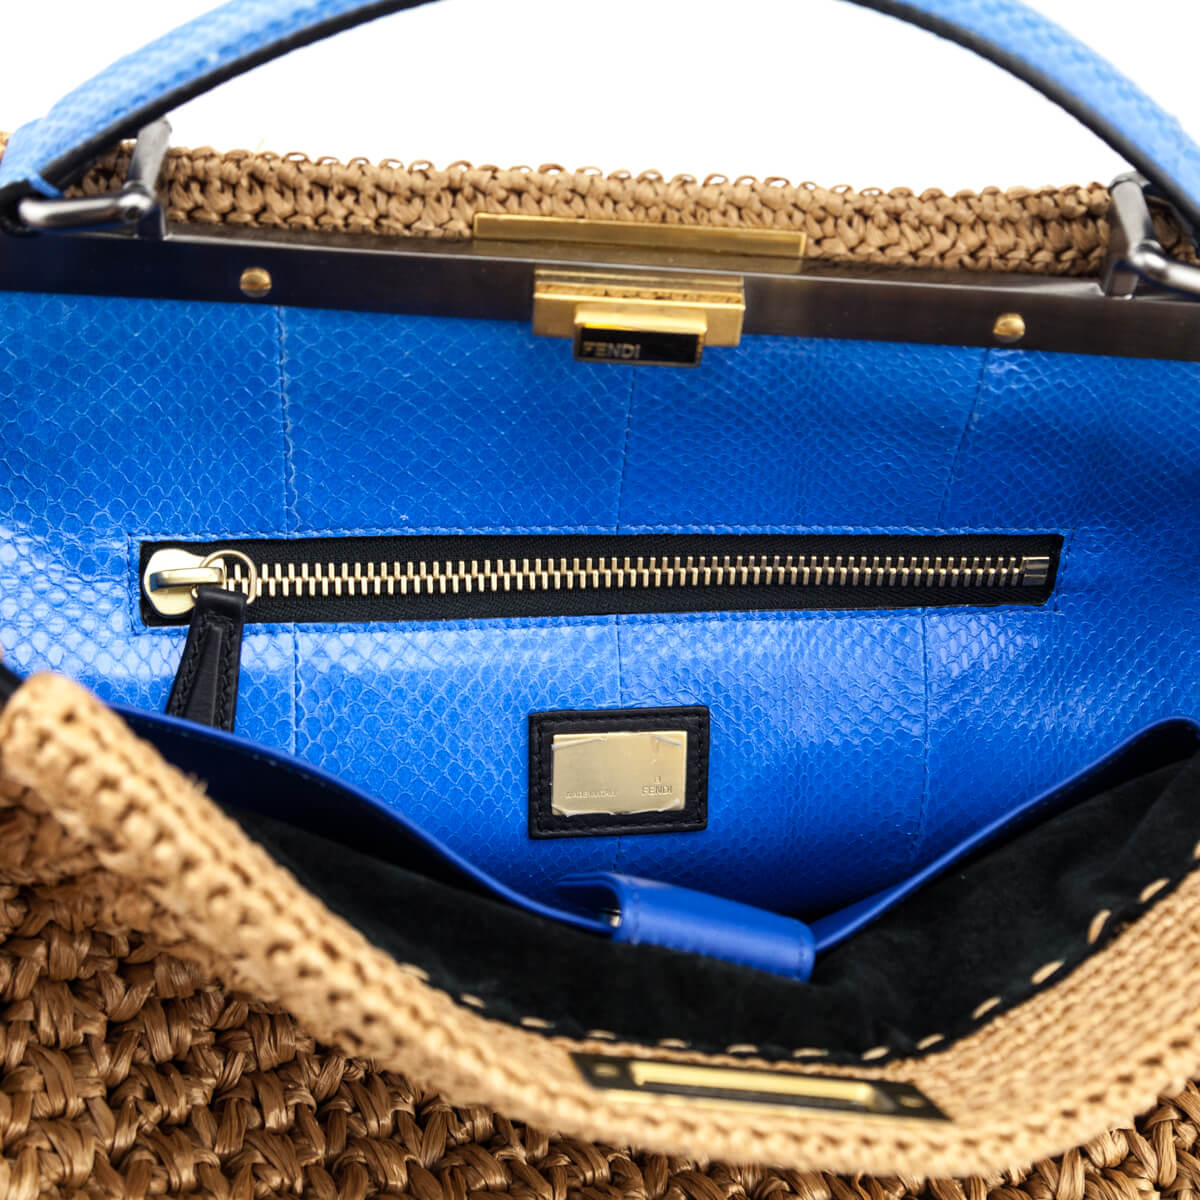 Fendi Beige Raffia & Blue Snakeskin Large Peekaboo Bag - Love that Bag etc - Preowned Authentic Designer Handbags & Preloved Fashions